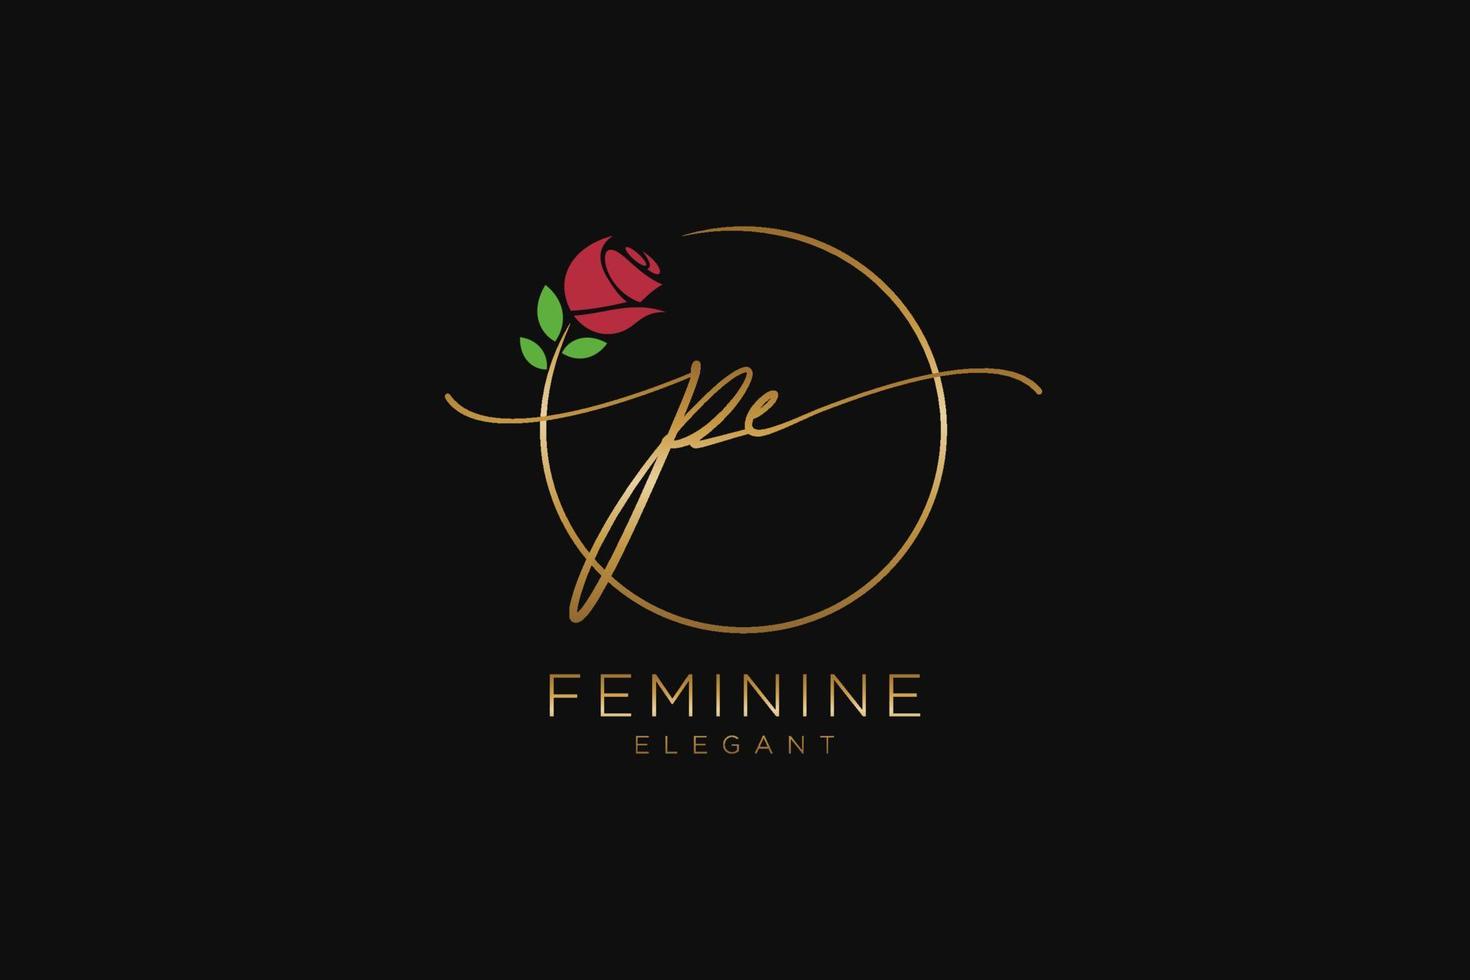 initial PE Feminine logo beauty monogram and elegant logo design, handwriting logo of initial signature, wedding, fashion, floral and botanical with creative template. vector